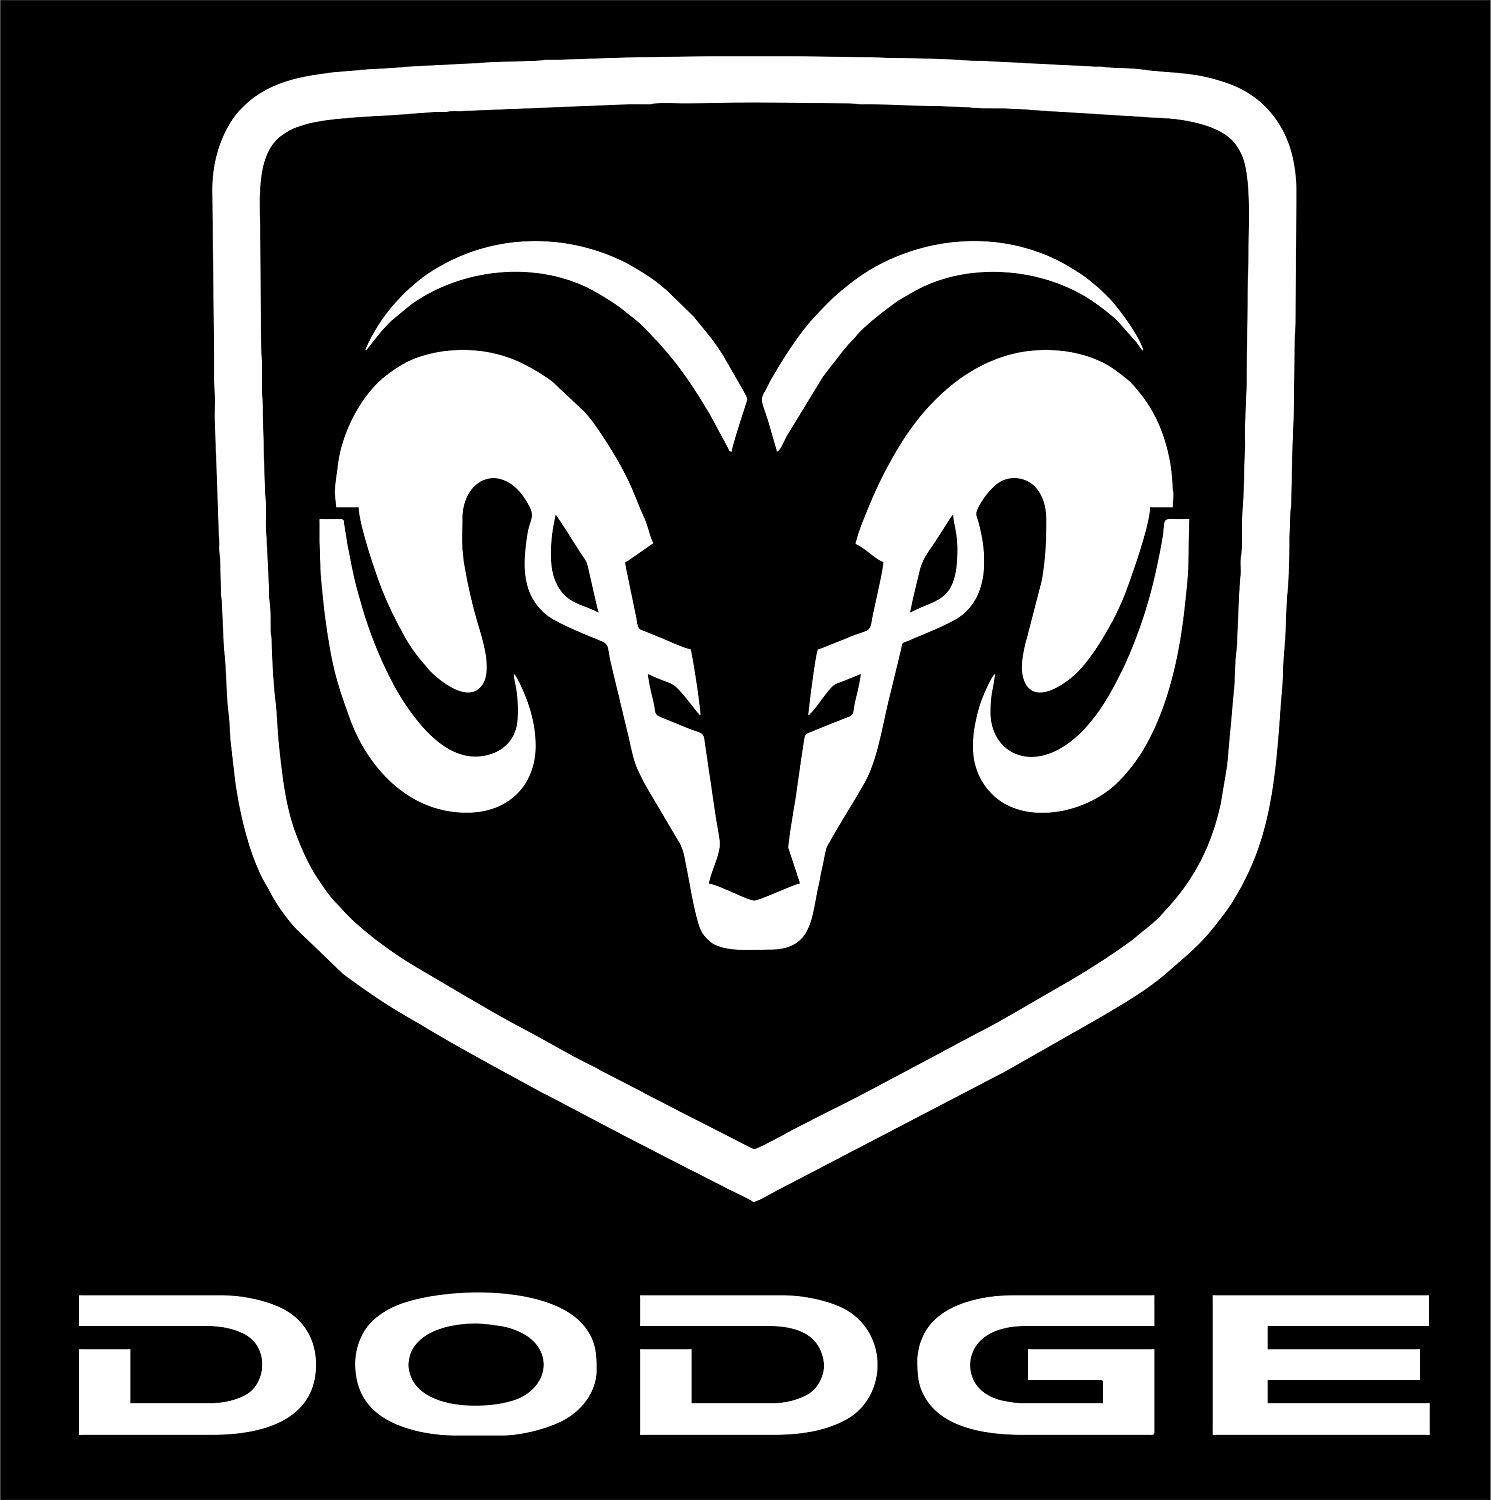 Ram Head Logo - Amazon.com: Dodge Ram Head Logo (8